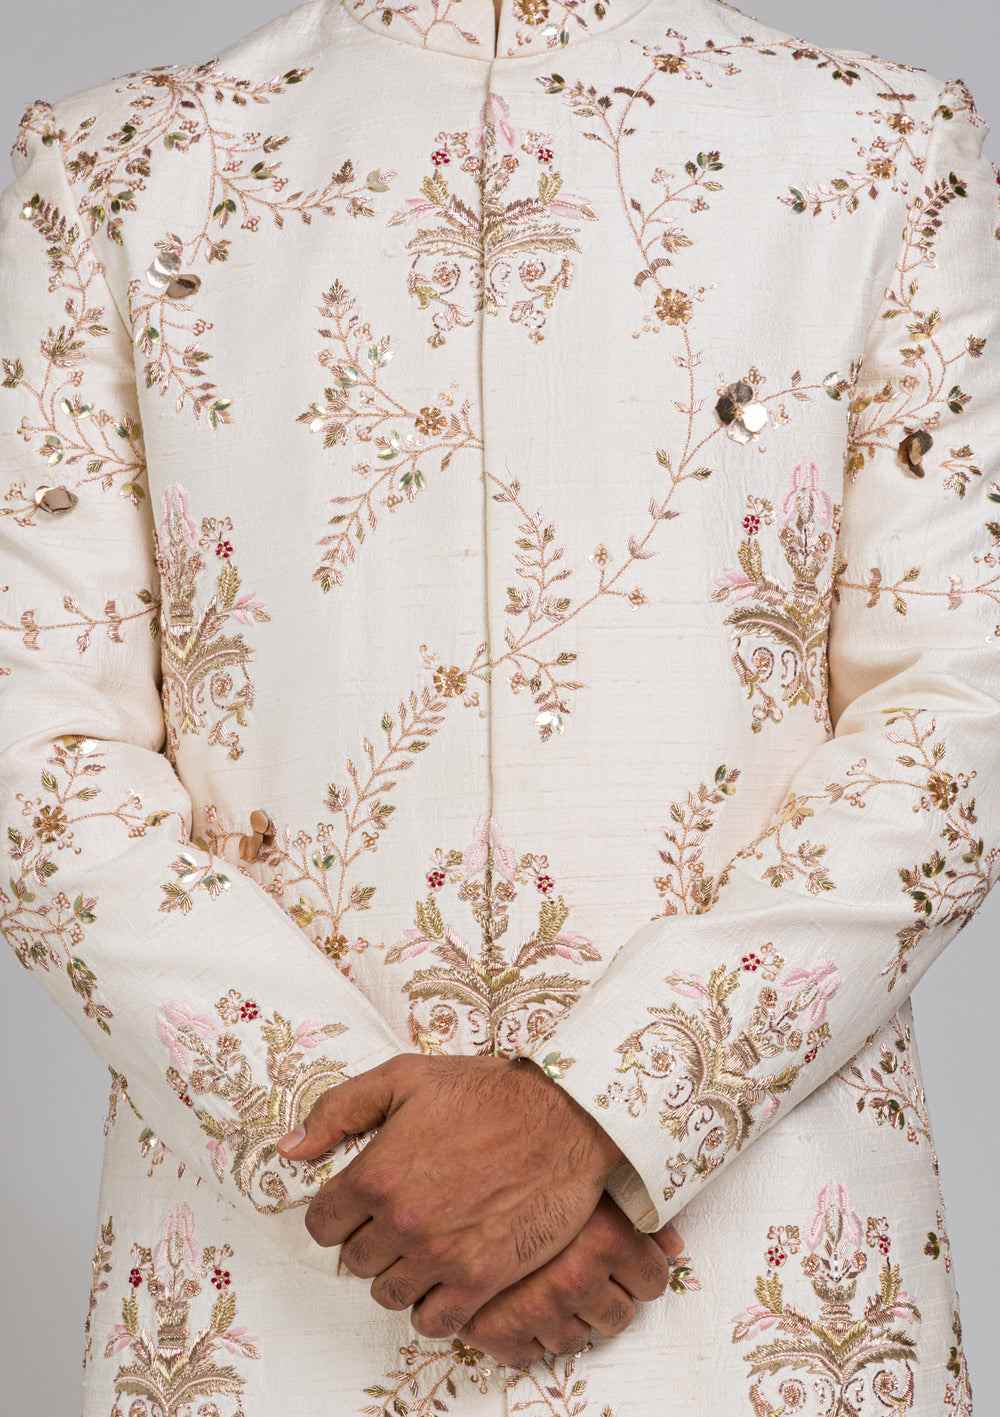 Men Off White Embroidered Floral Pakistani Sherwani